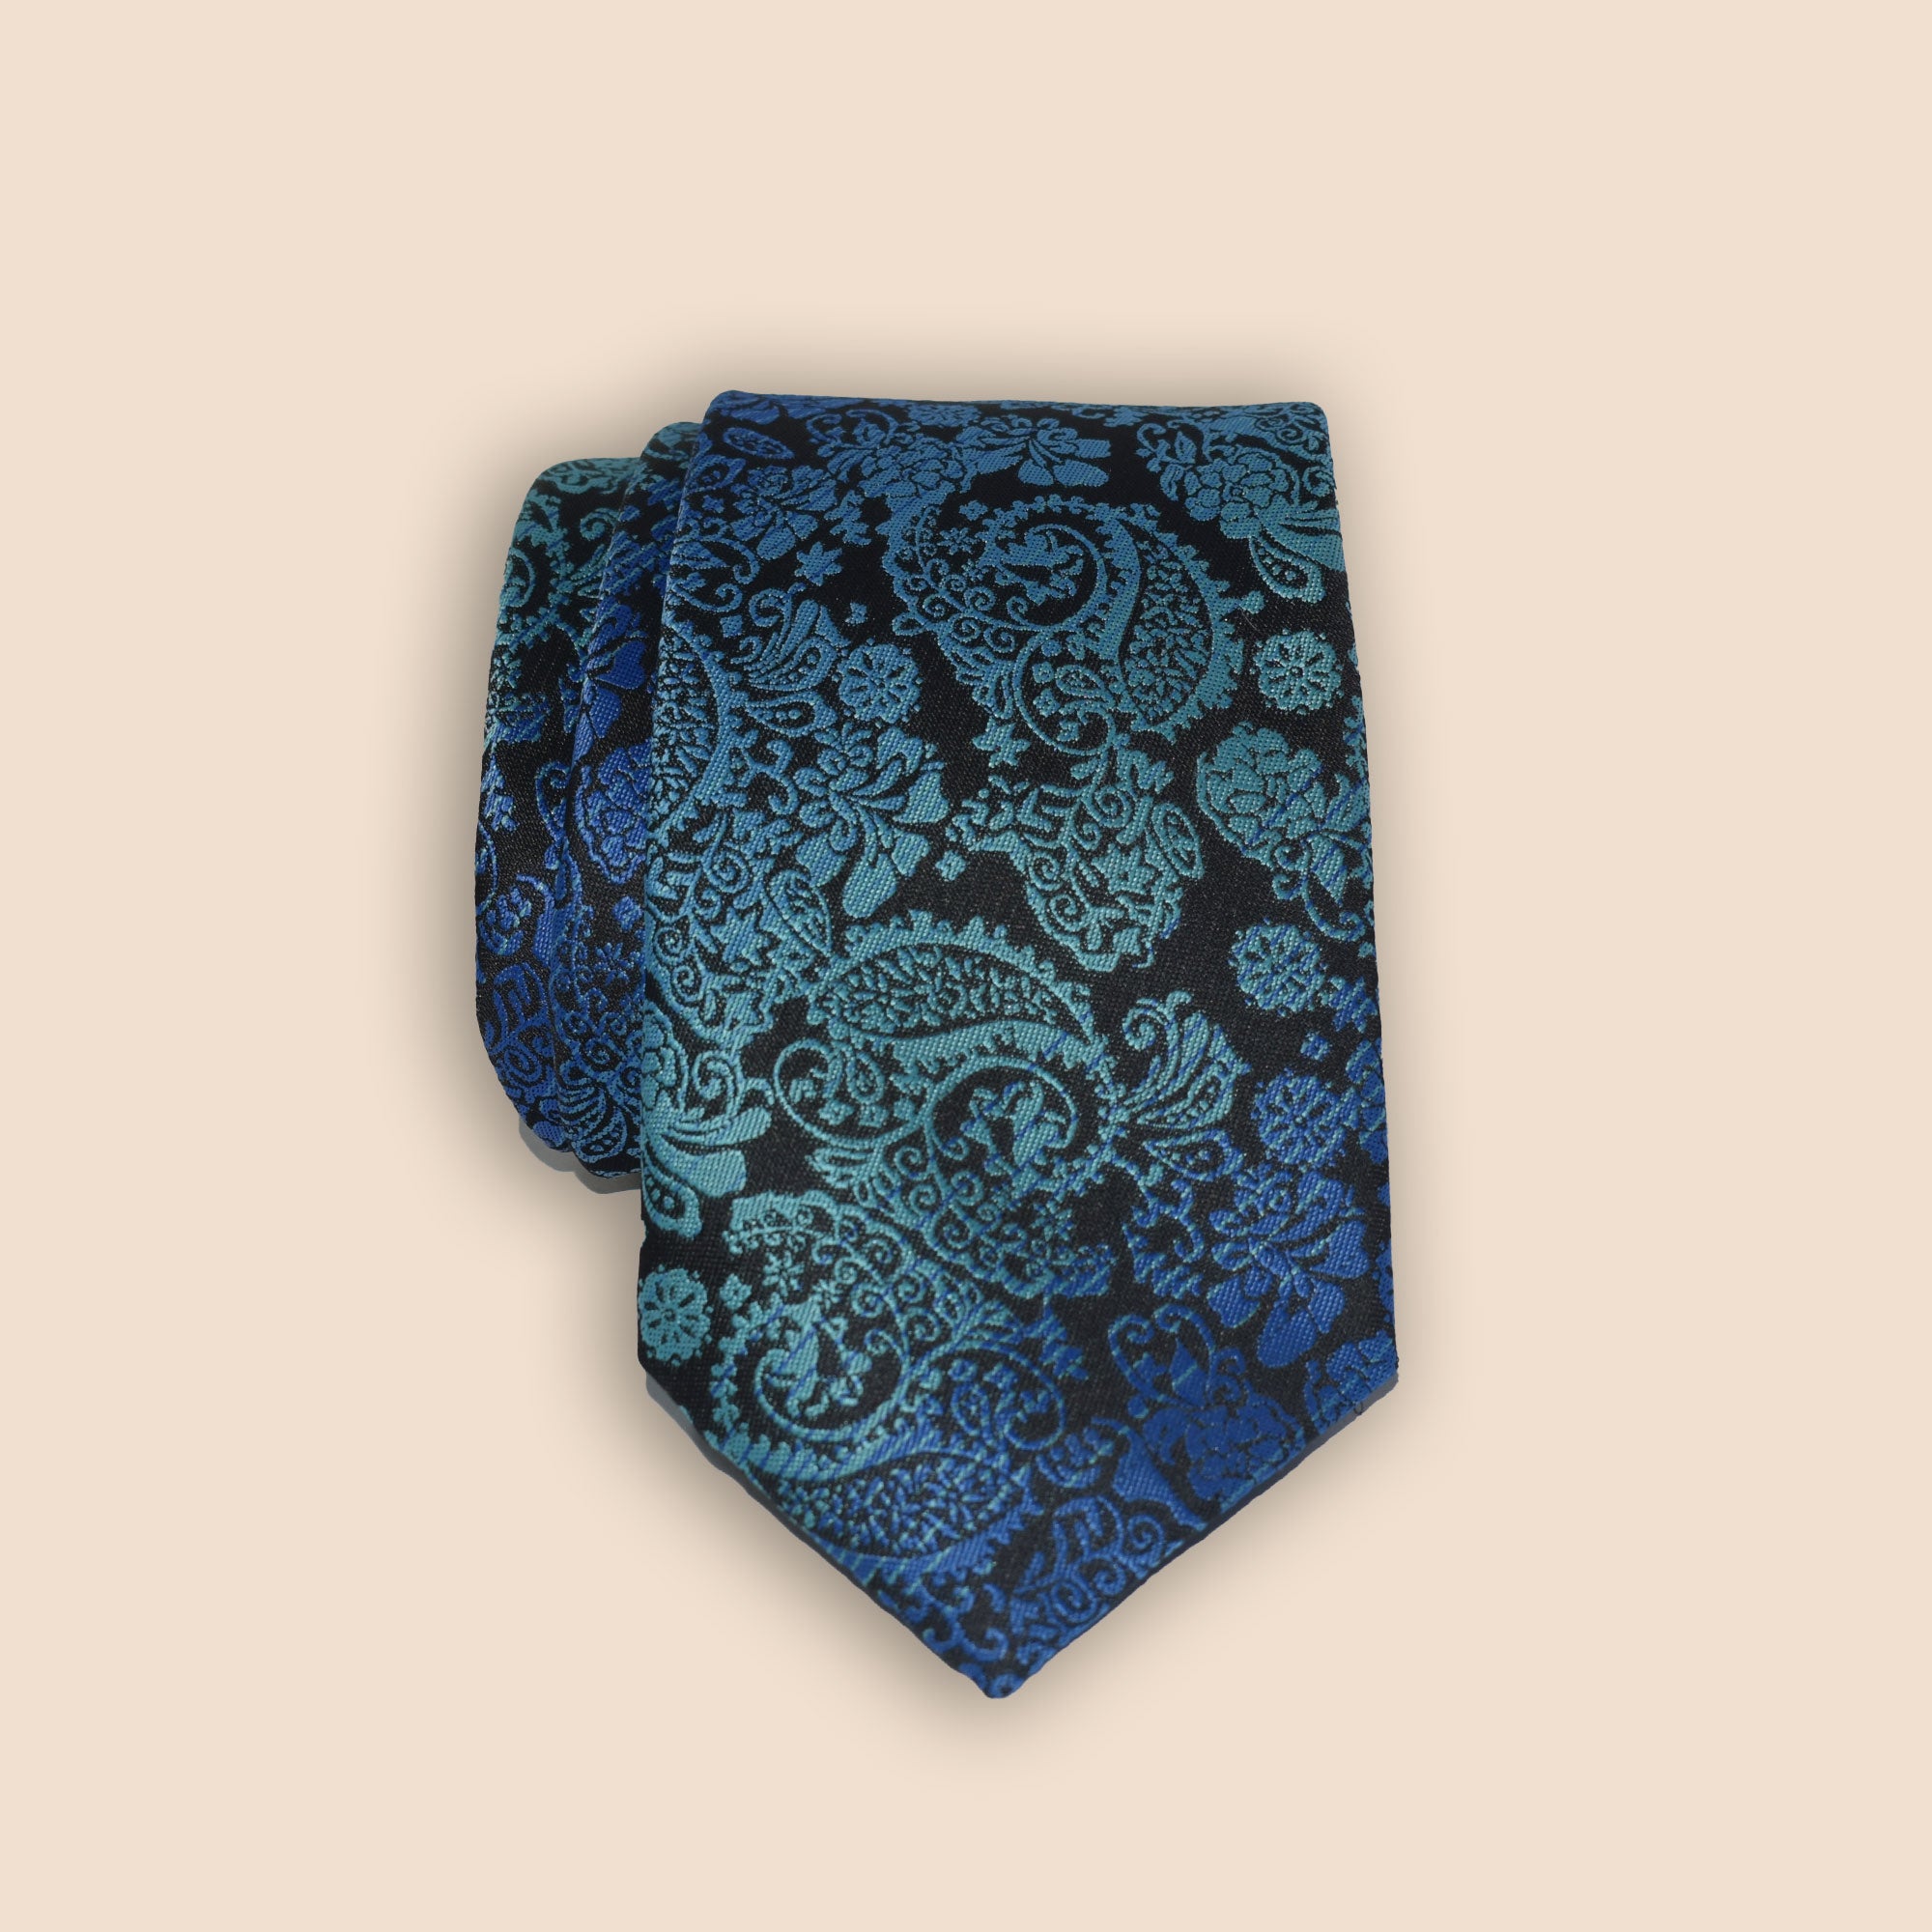 Blue Paisley handmade Necktie and Pocket Square Set